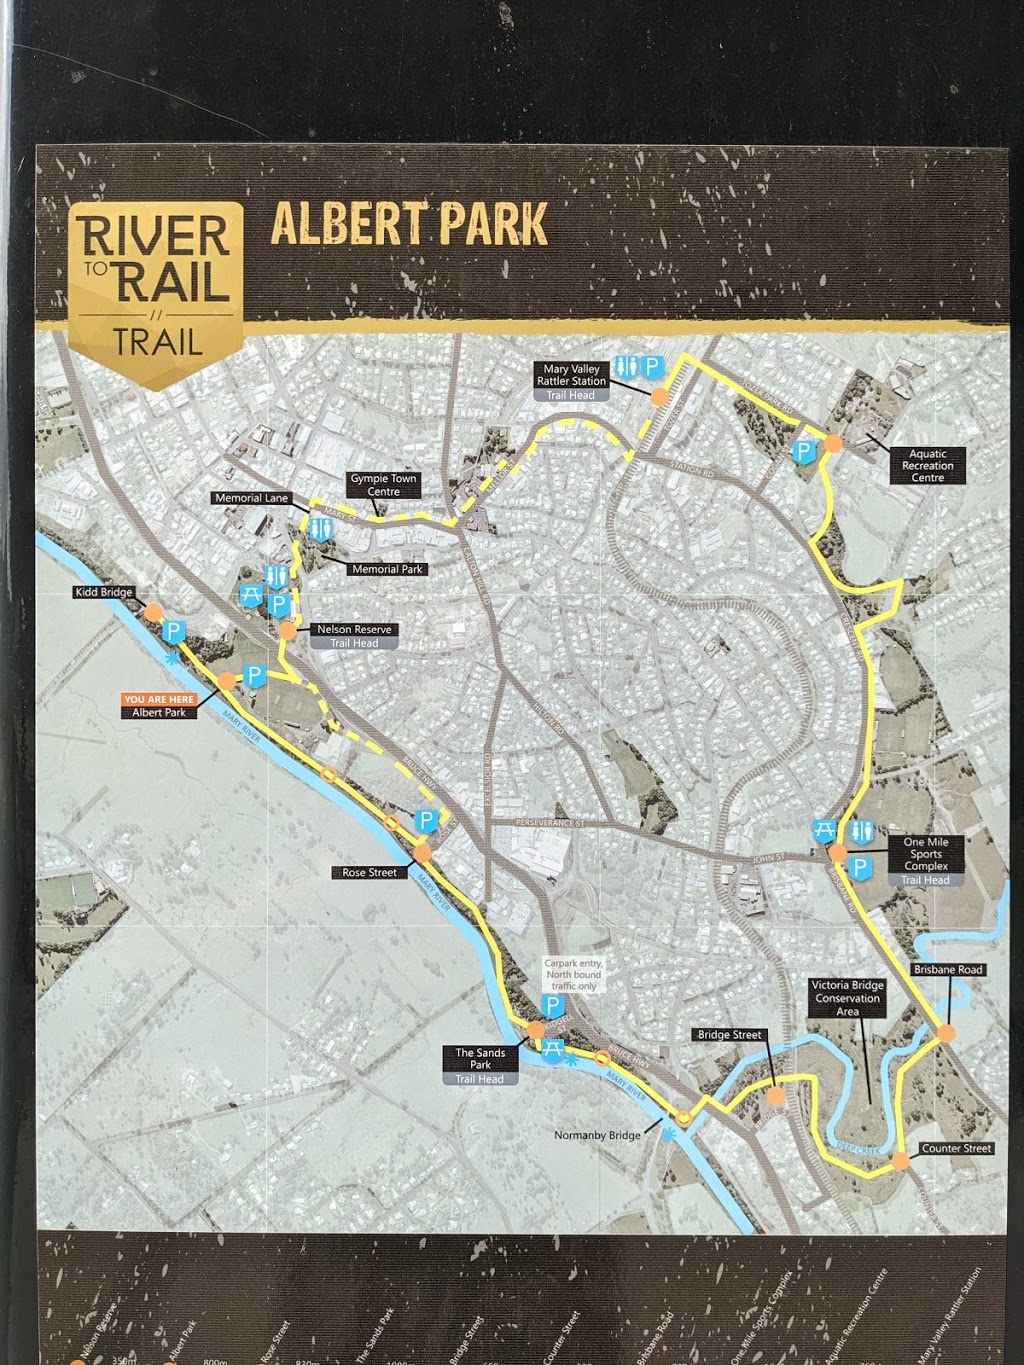 River to Rail Trail - Albert Park | park | Gympie QLD 4570, Australia